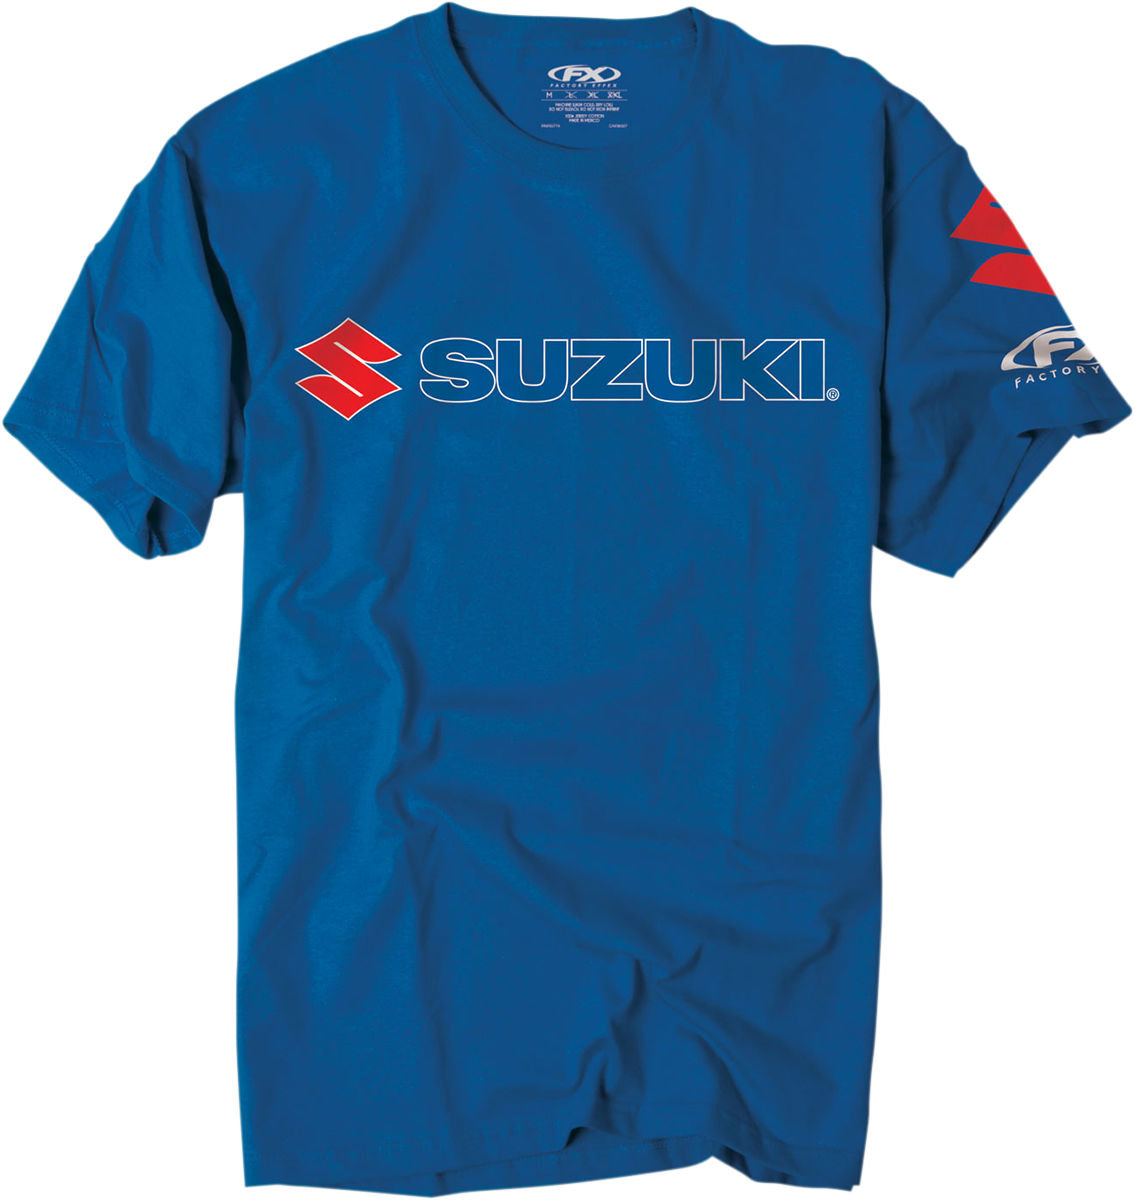 FACTORY EFFEX Suzuki Team T-Shirt - Blue - 2XL 15-88466